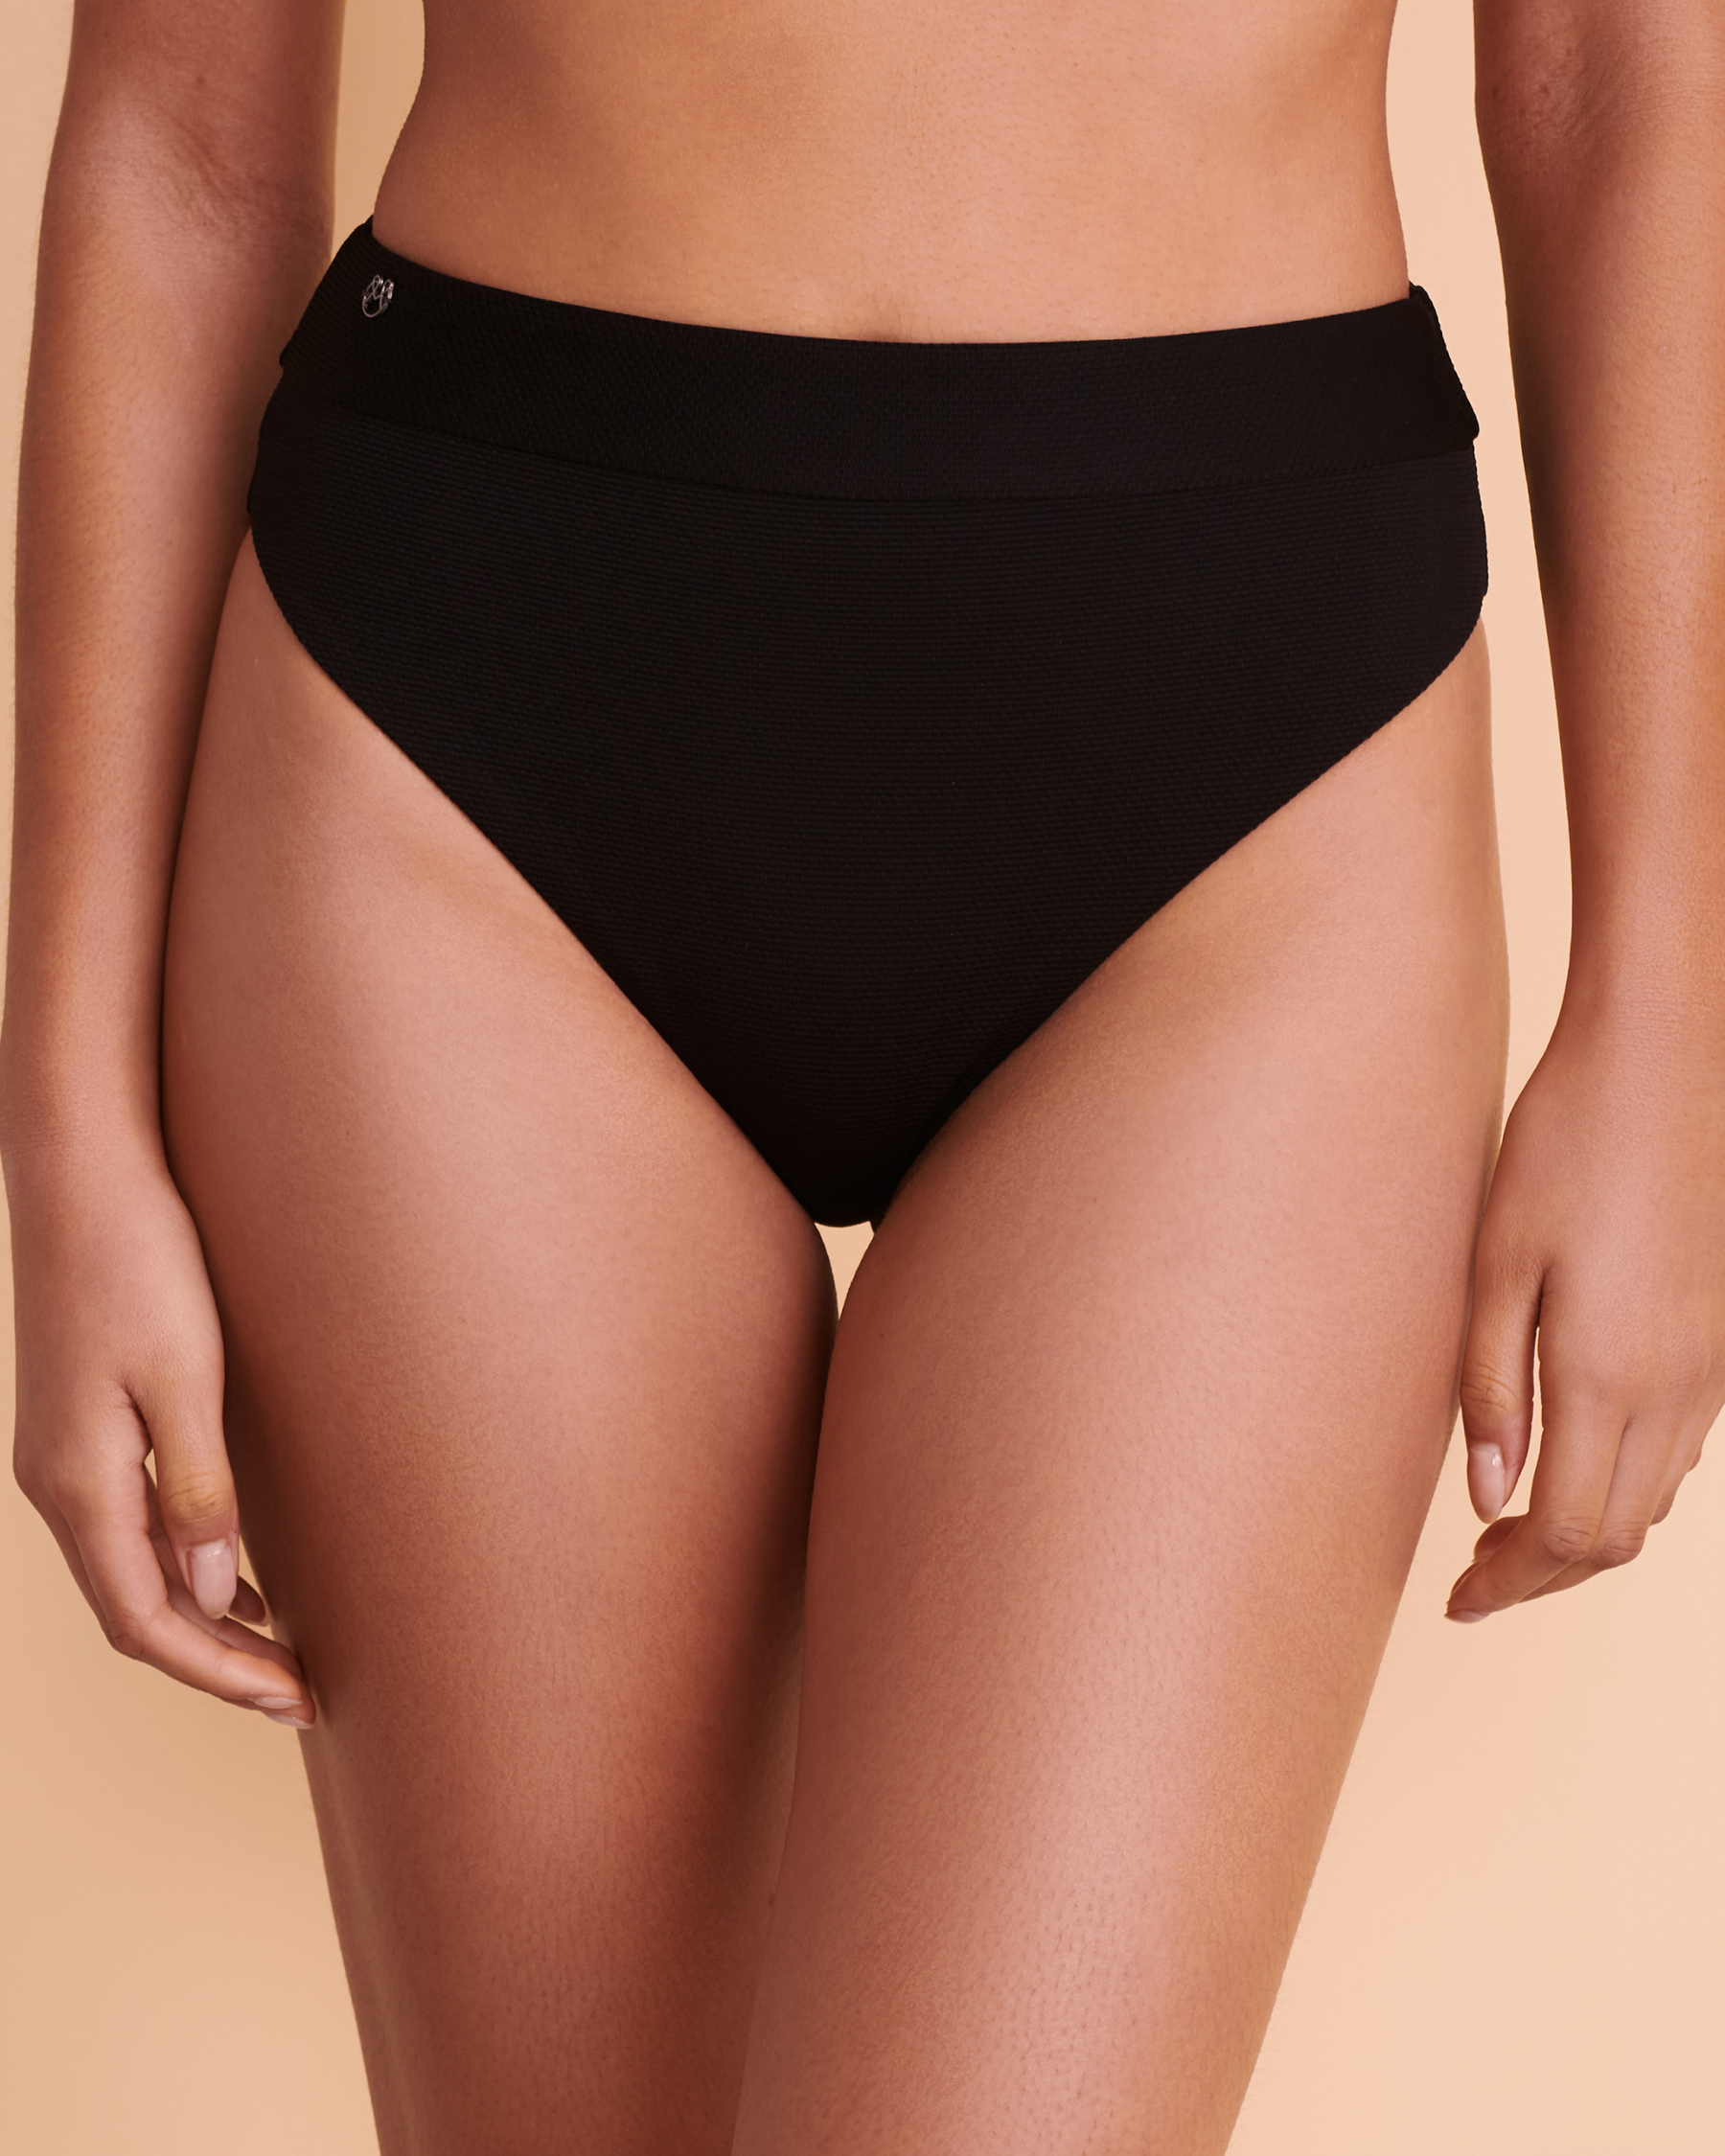 MAAJI BLACK ORCHID Suzy Q Reversible High Waist Bikini Bottom Black 3075SCC011 - View1